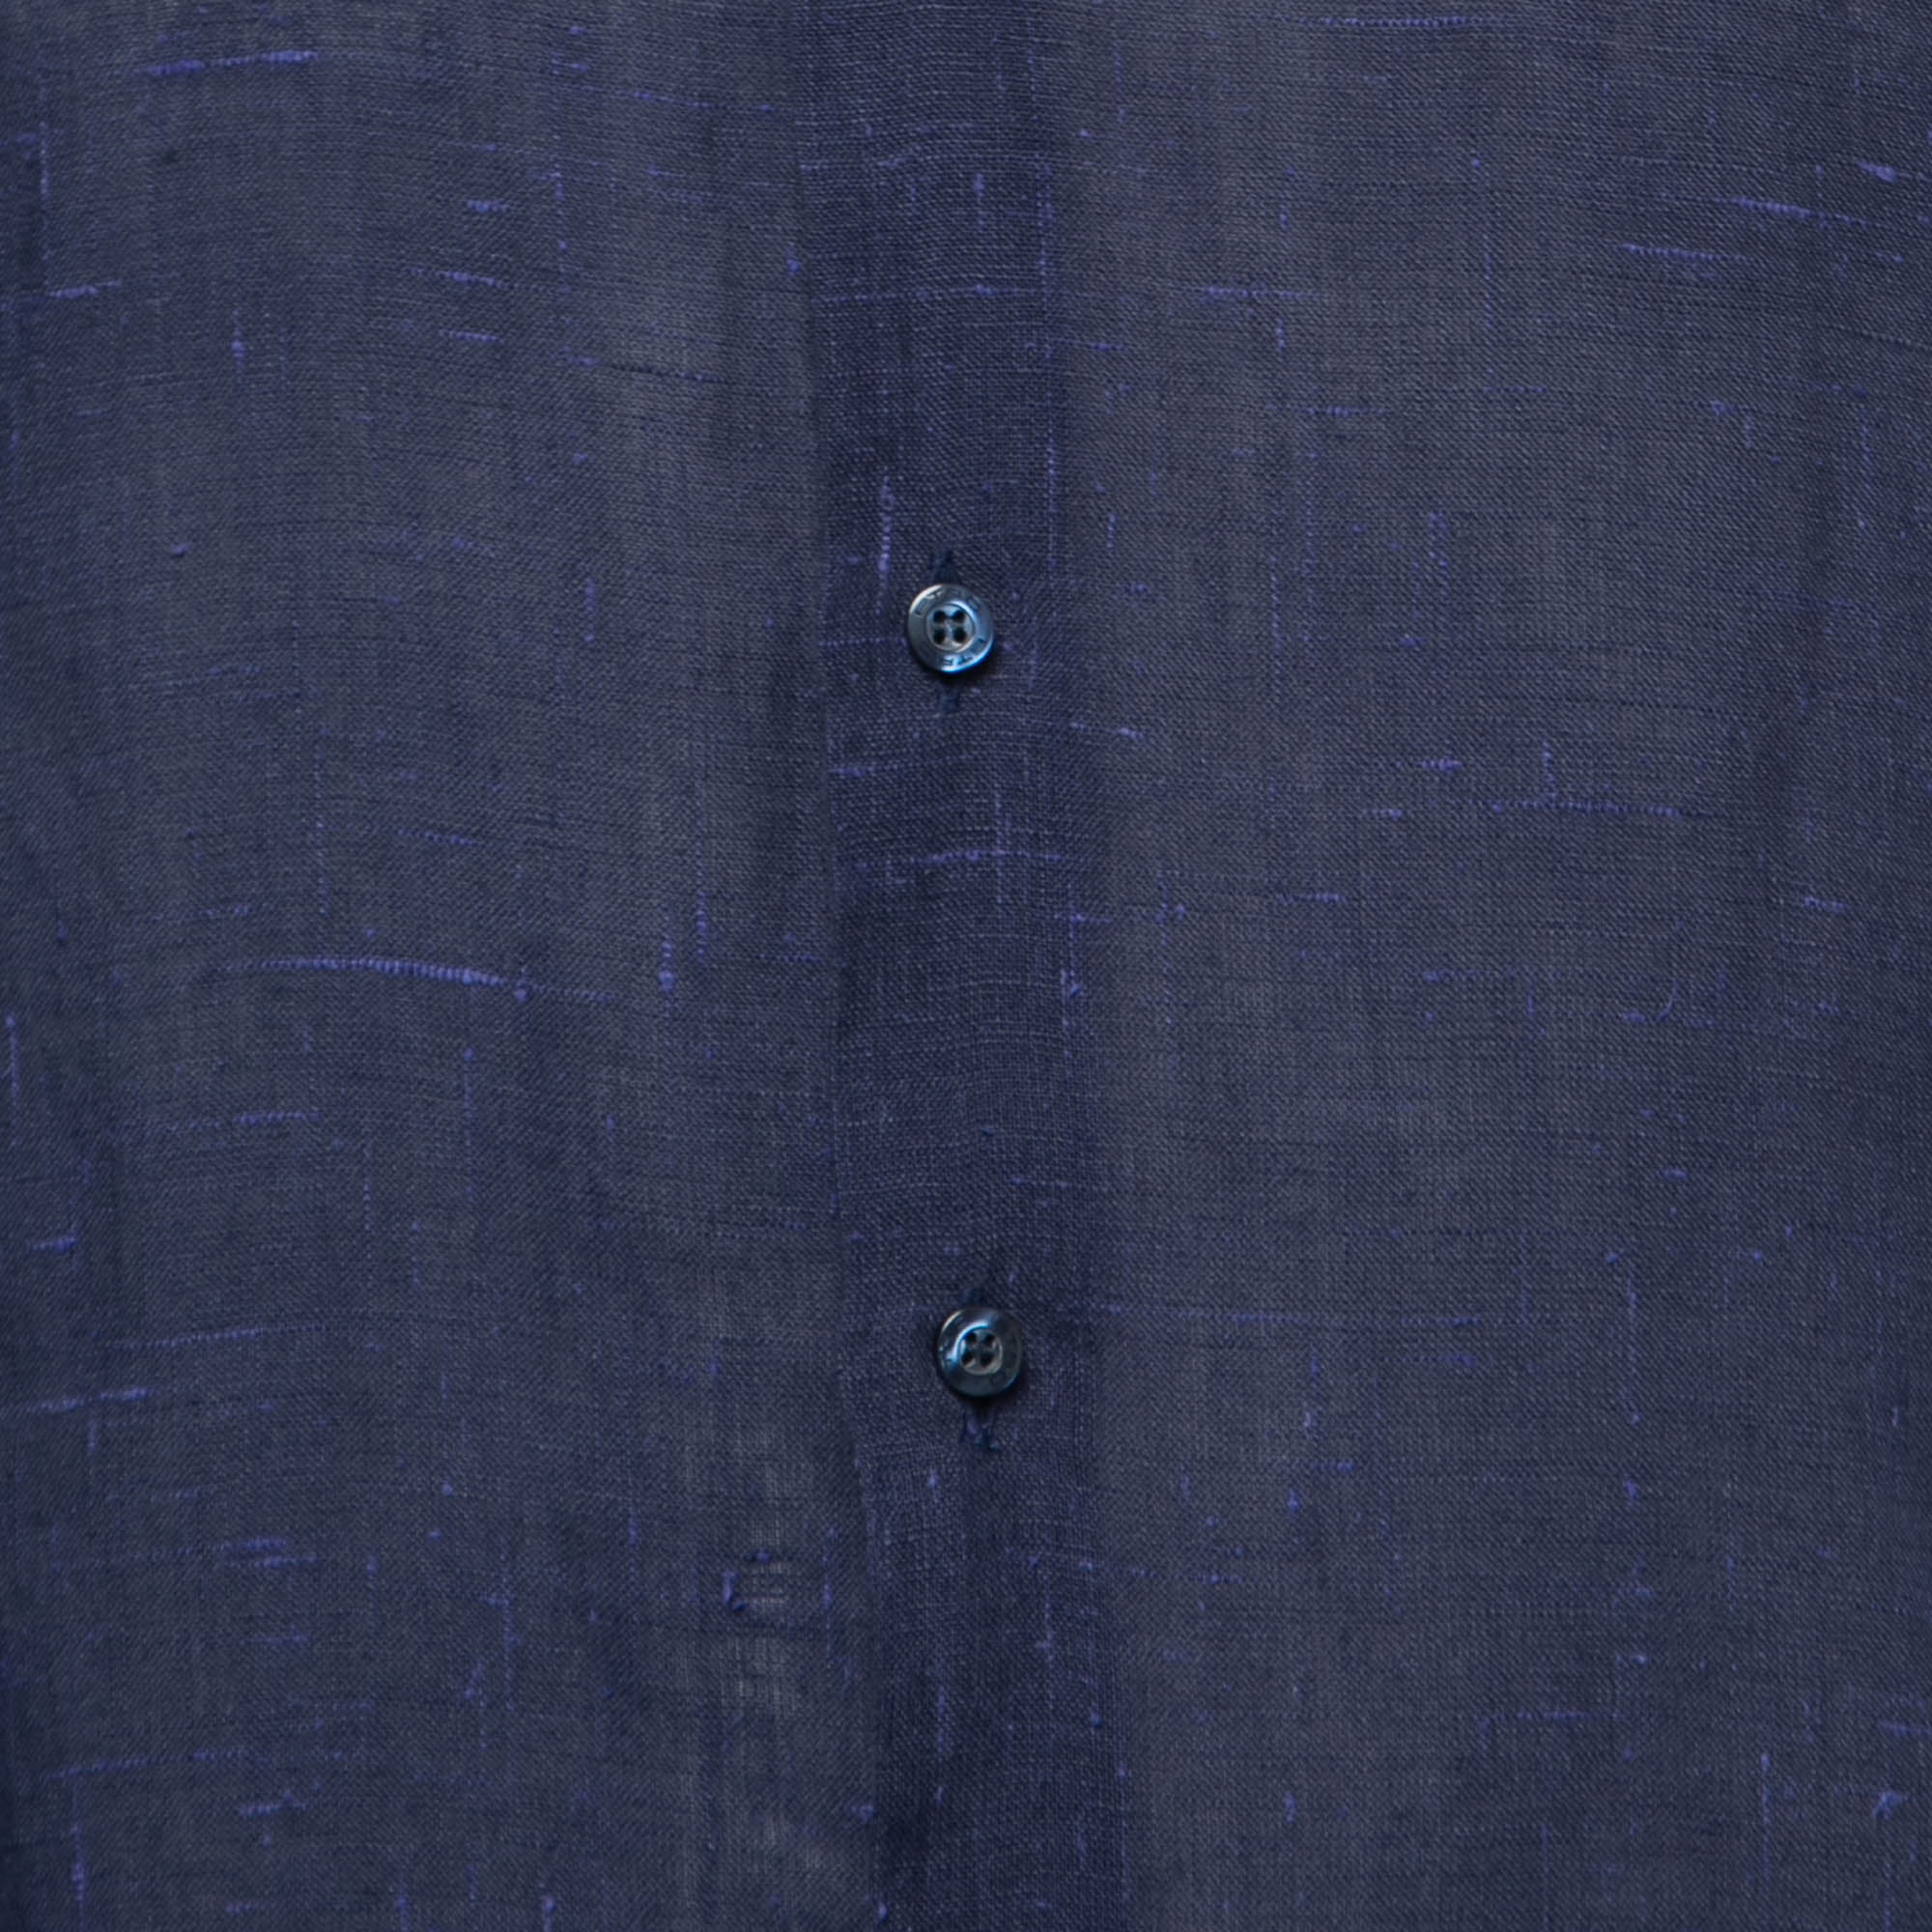 Etro Navy Blue Linen Full Sleeve Shirt XL